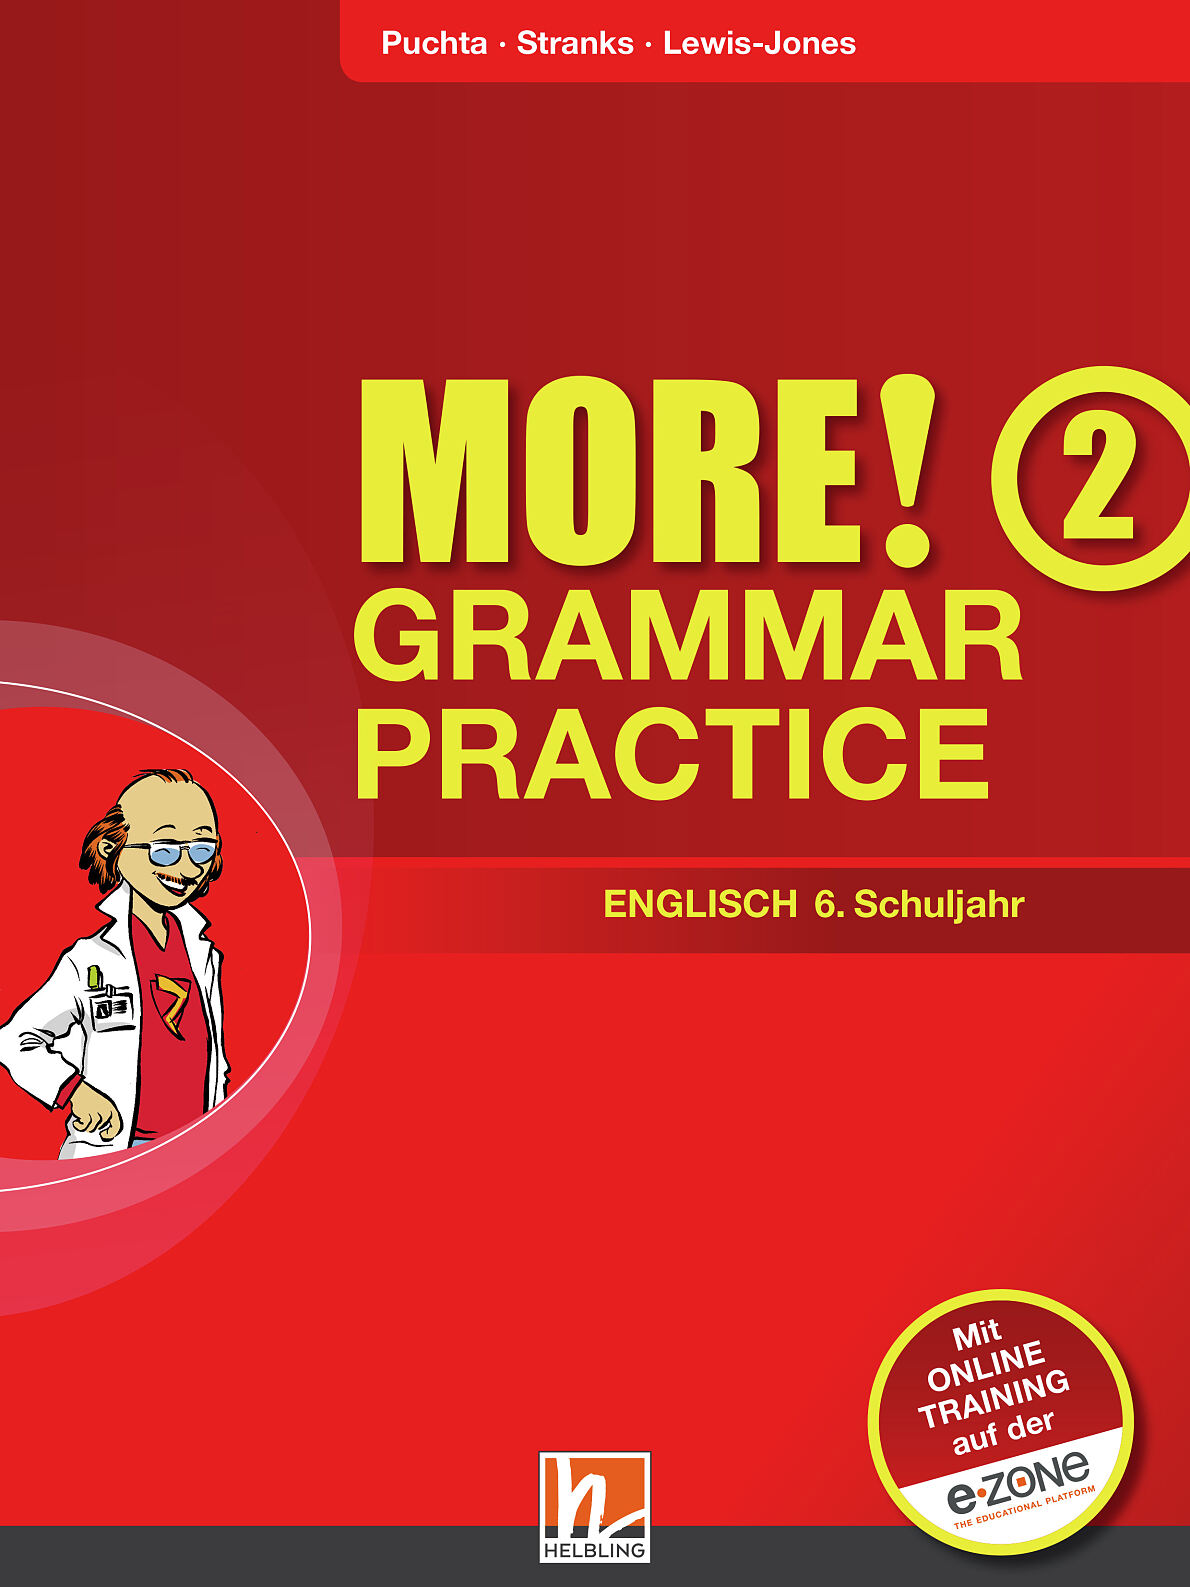 More! Grammar Practise